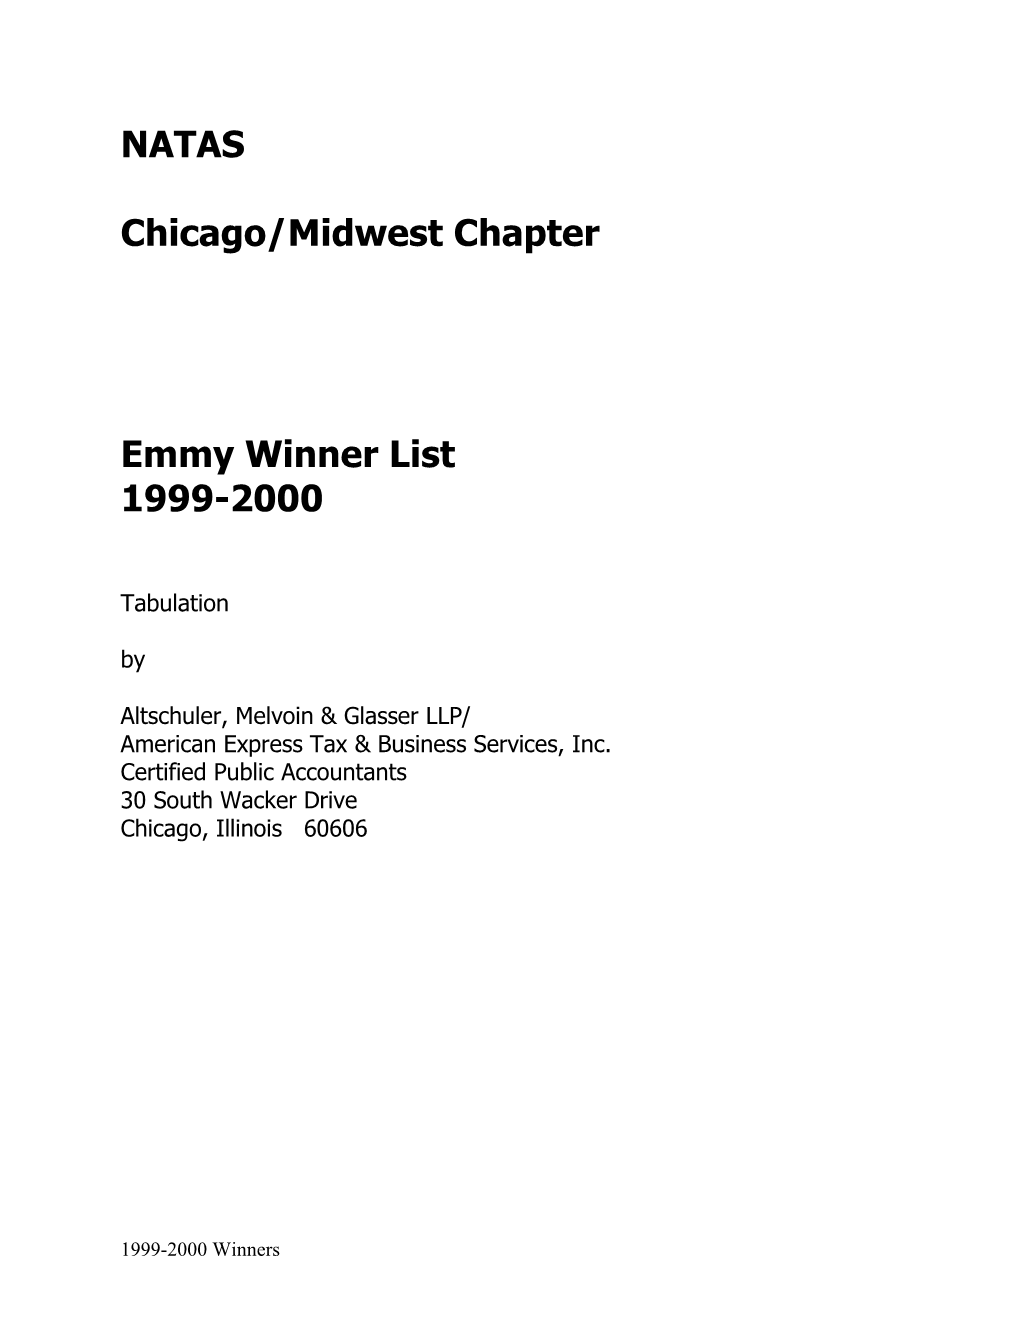 NATAS Chicago/Midwest Chapter Emmy Winner List 1999-2000